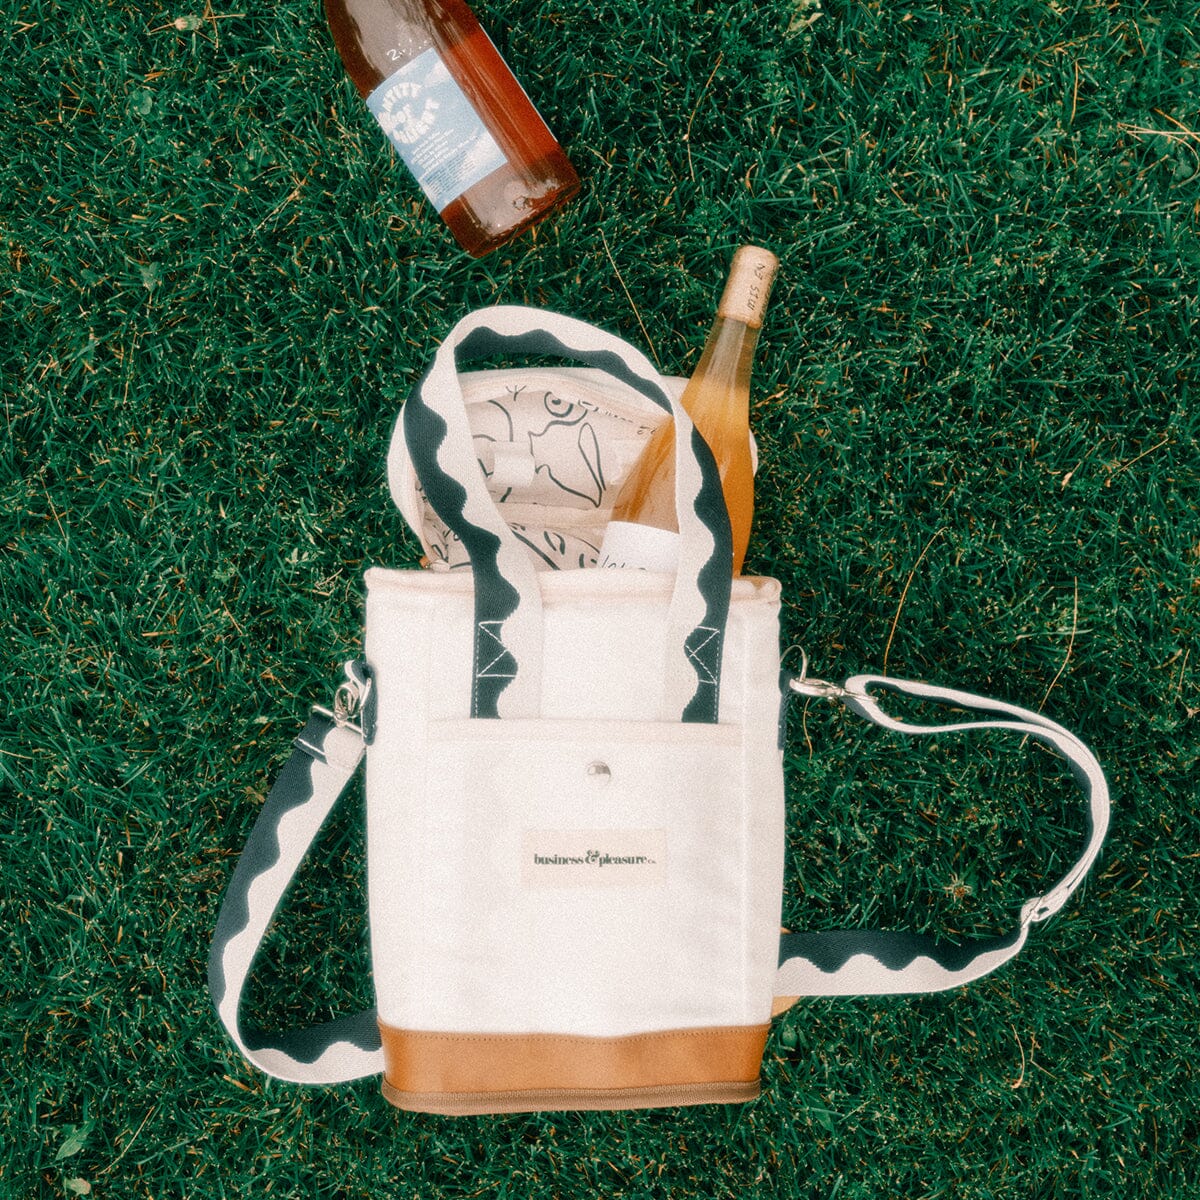 The Wine Cooler Tote Bag - Rivie White Wine Cooler Tote Bag Business & Pleasure Co Aus 